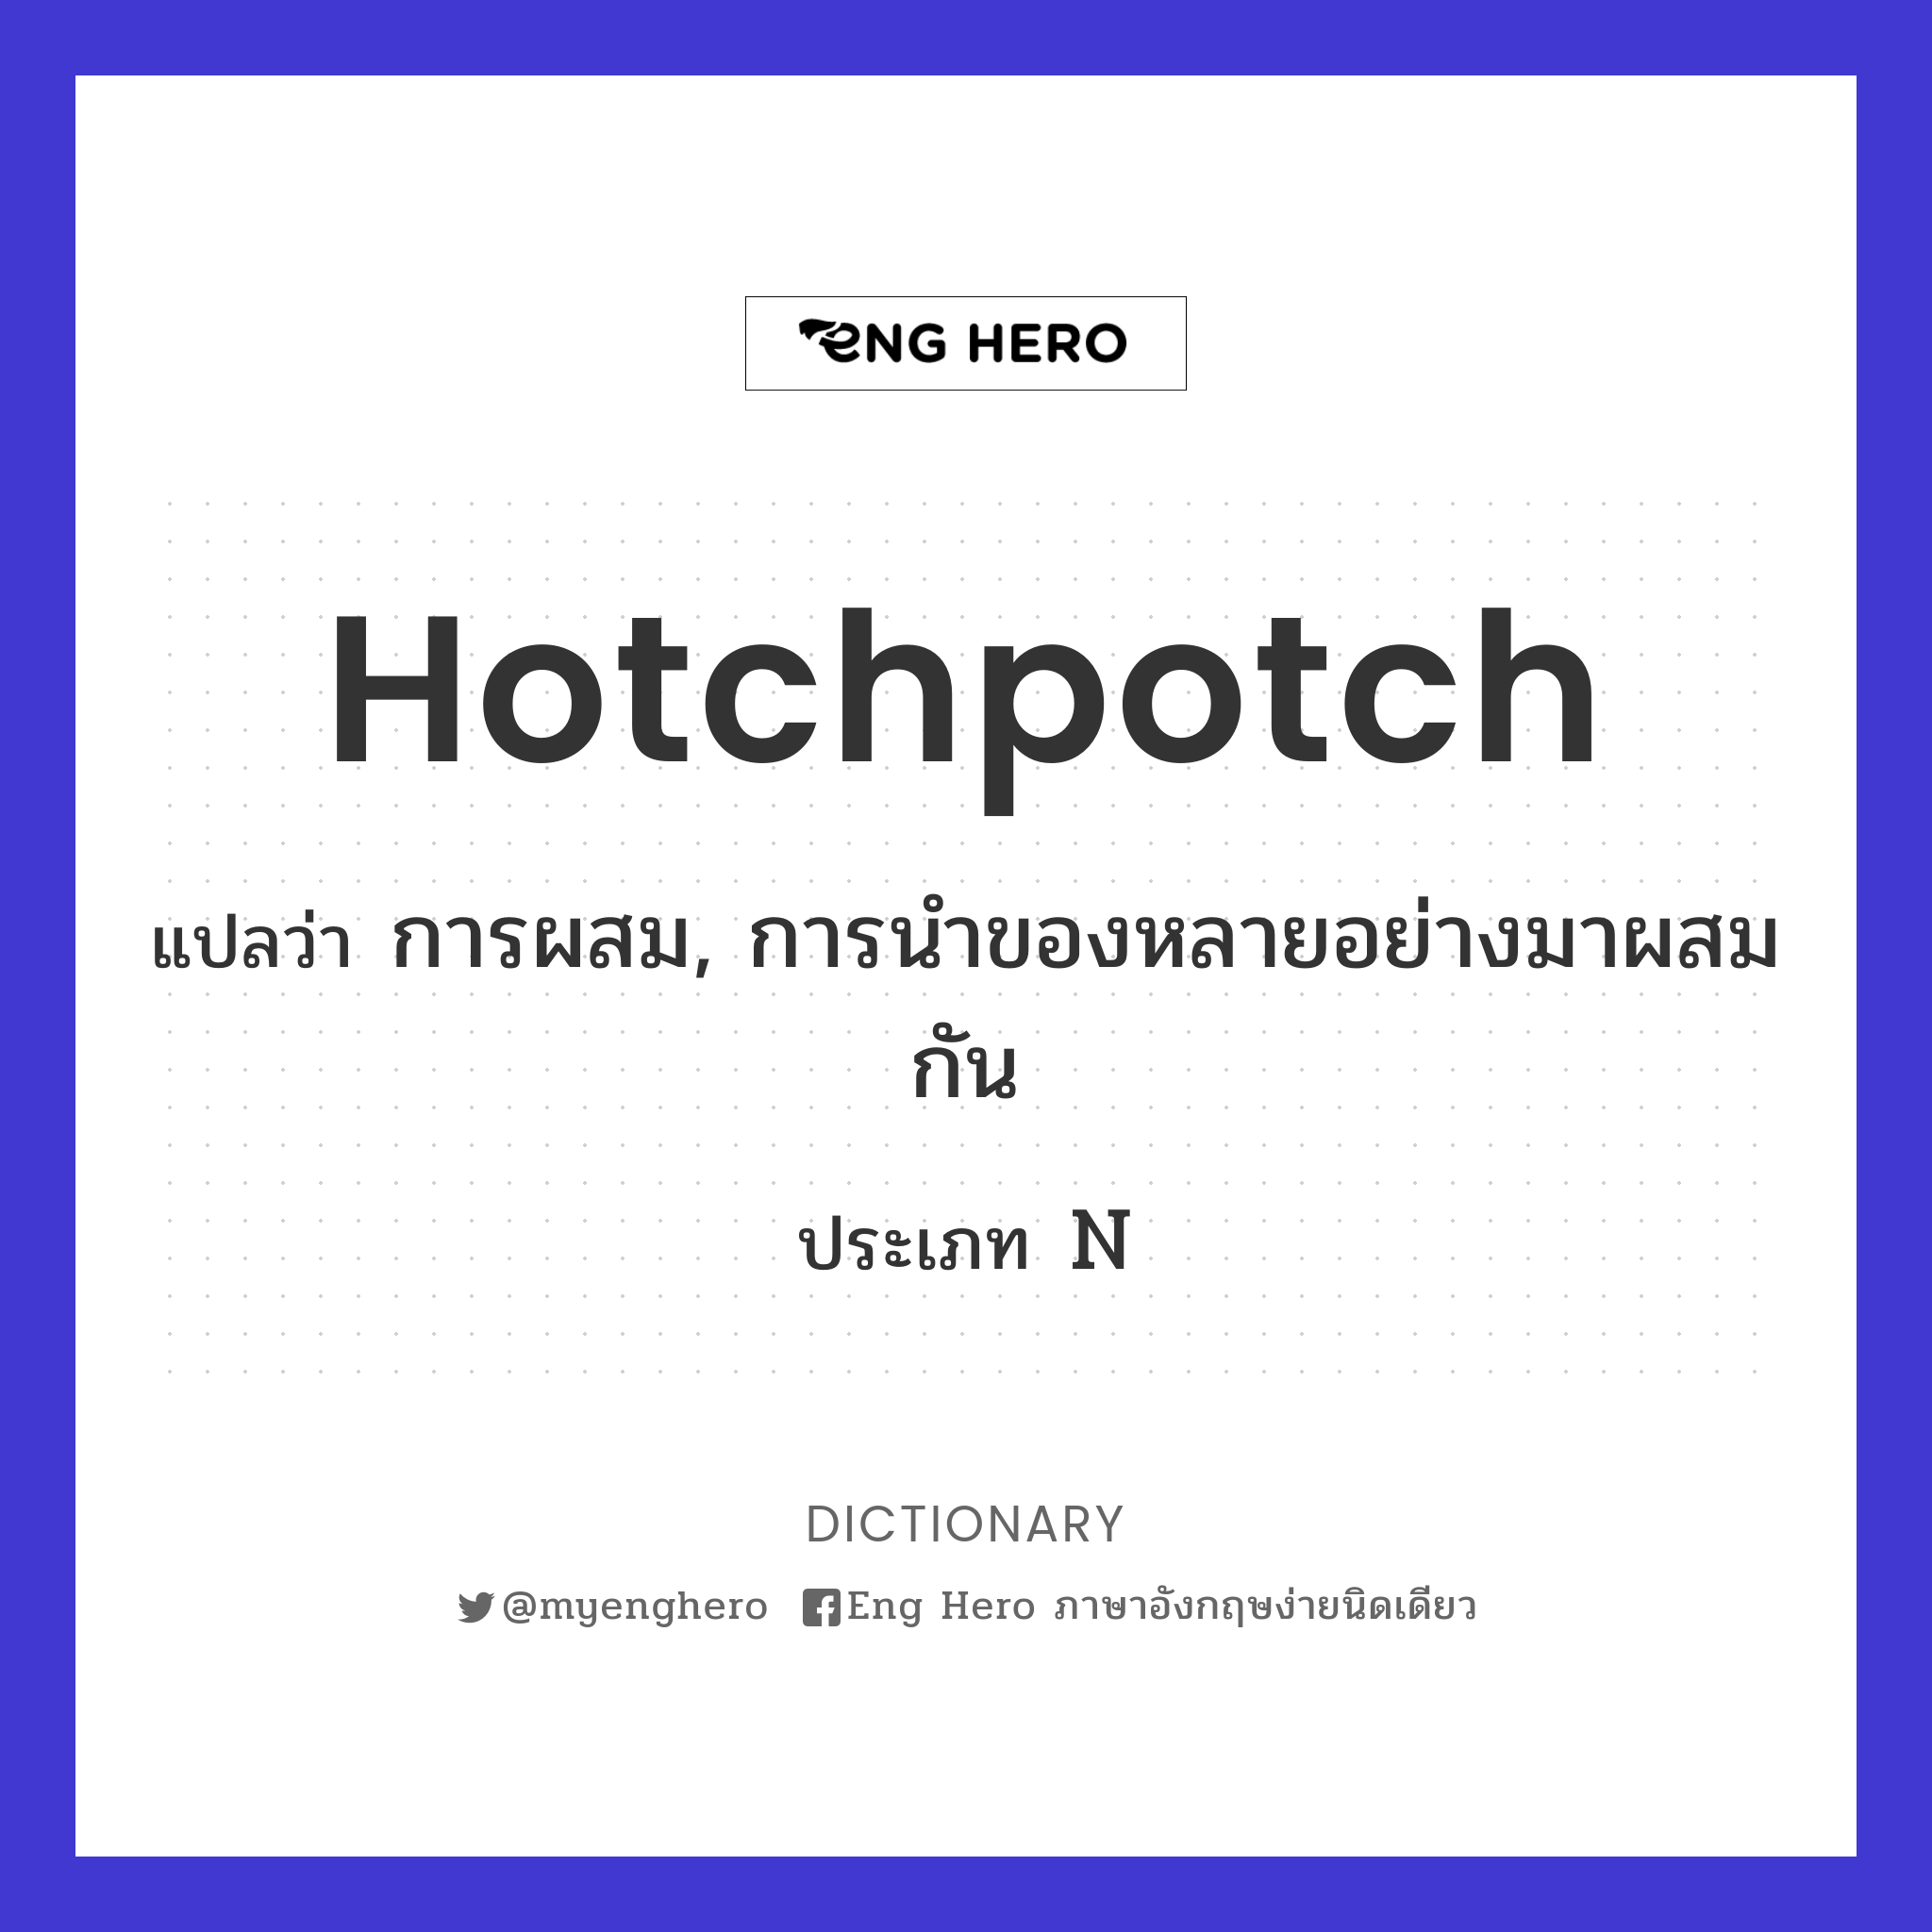 hotchpotch